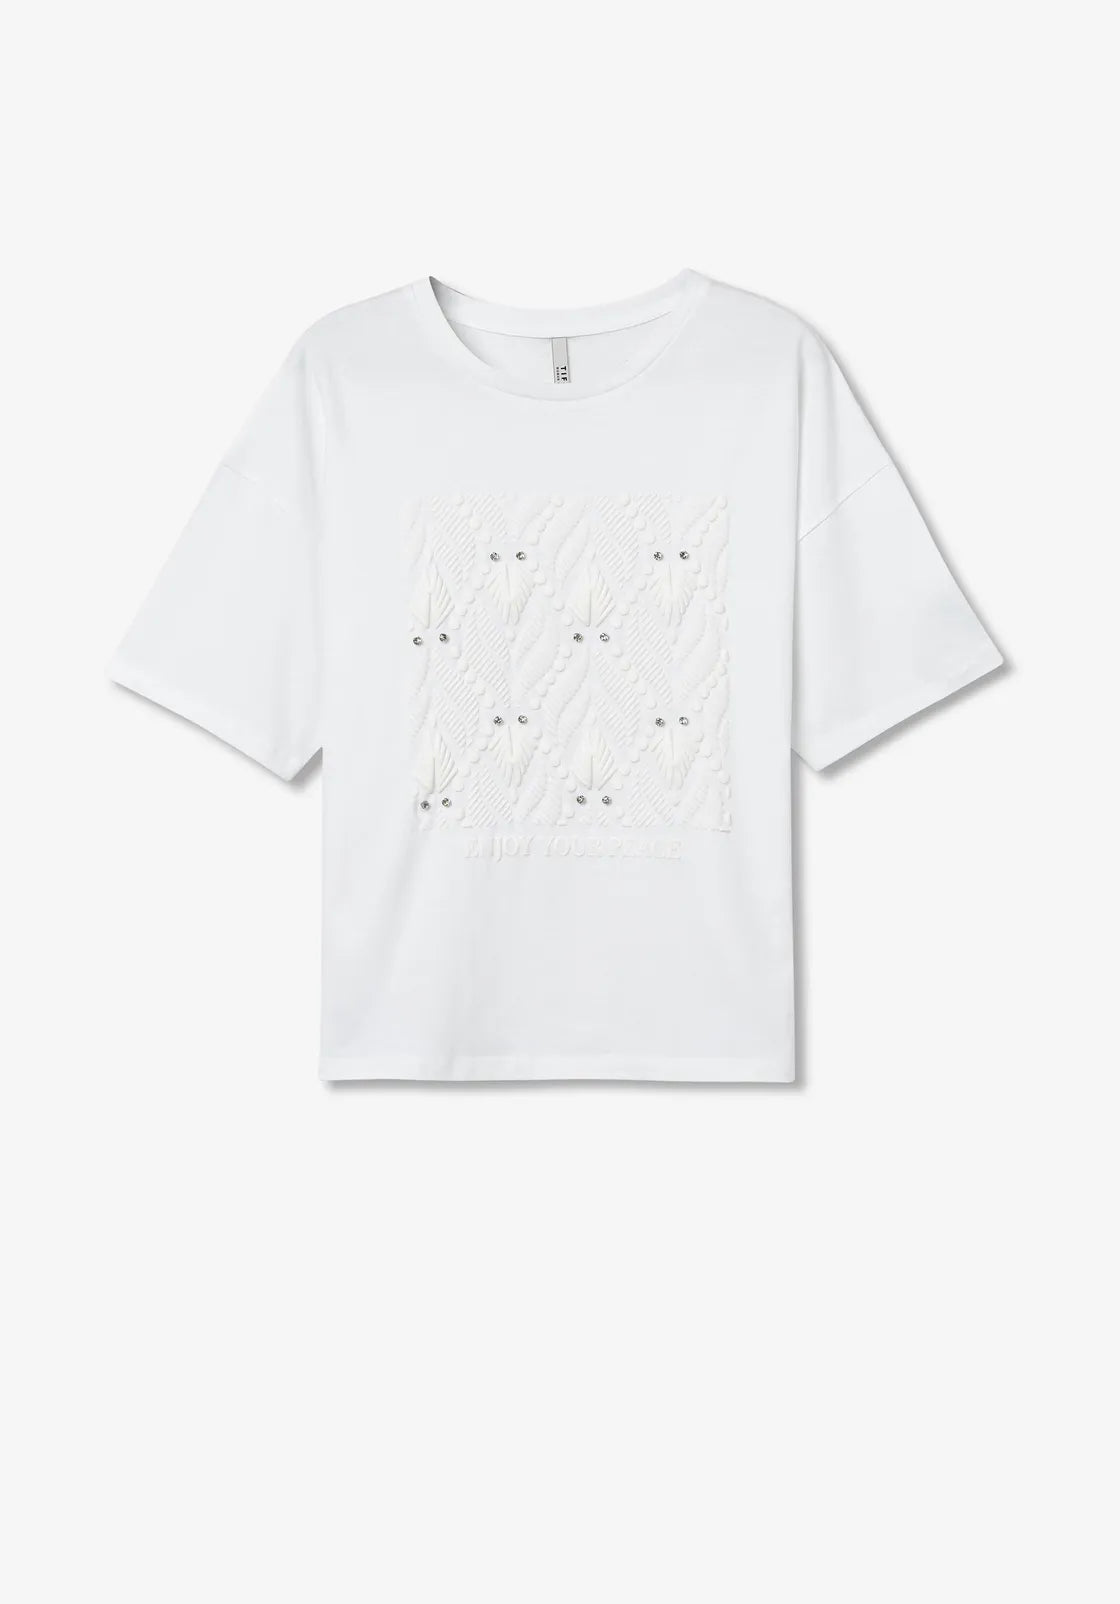 Tiffosi T-Shirt Strass-White